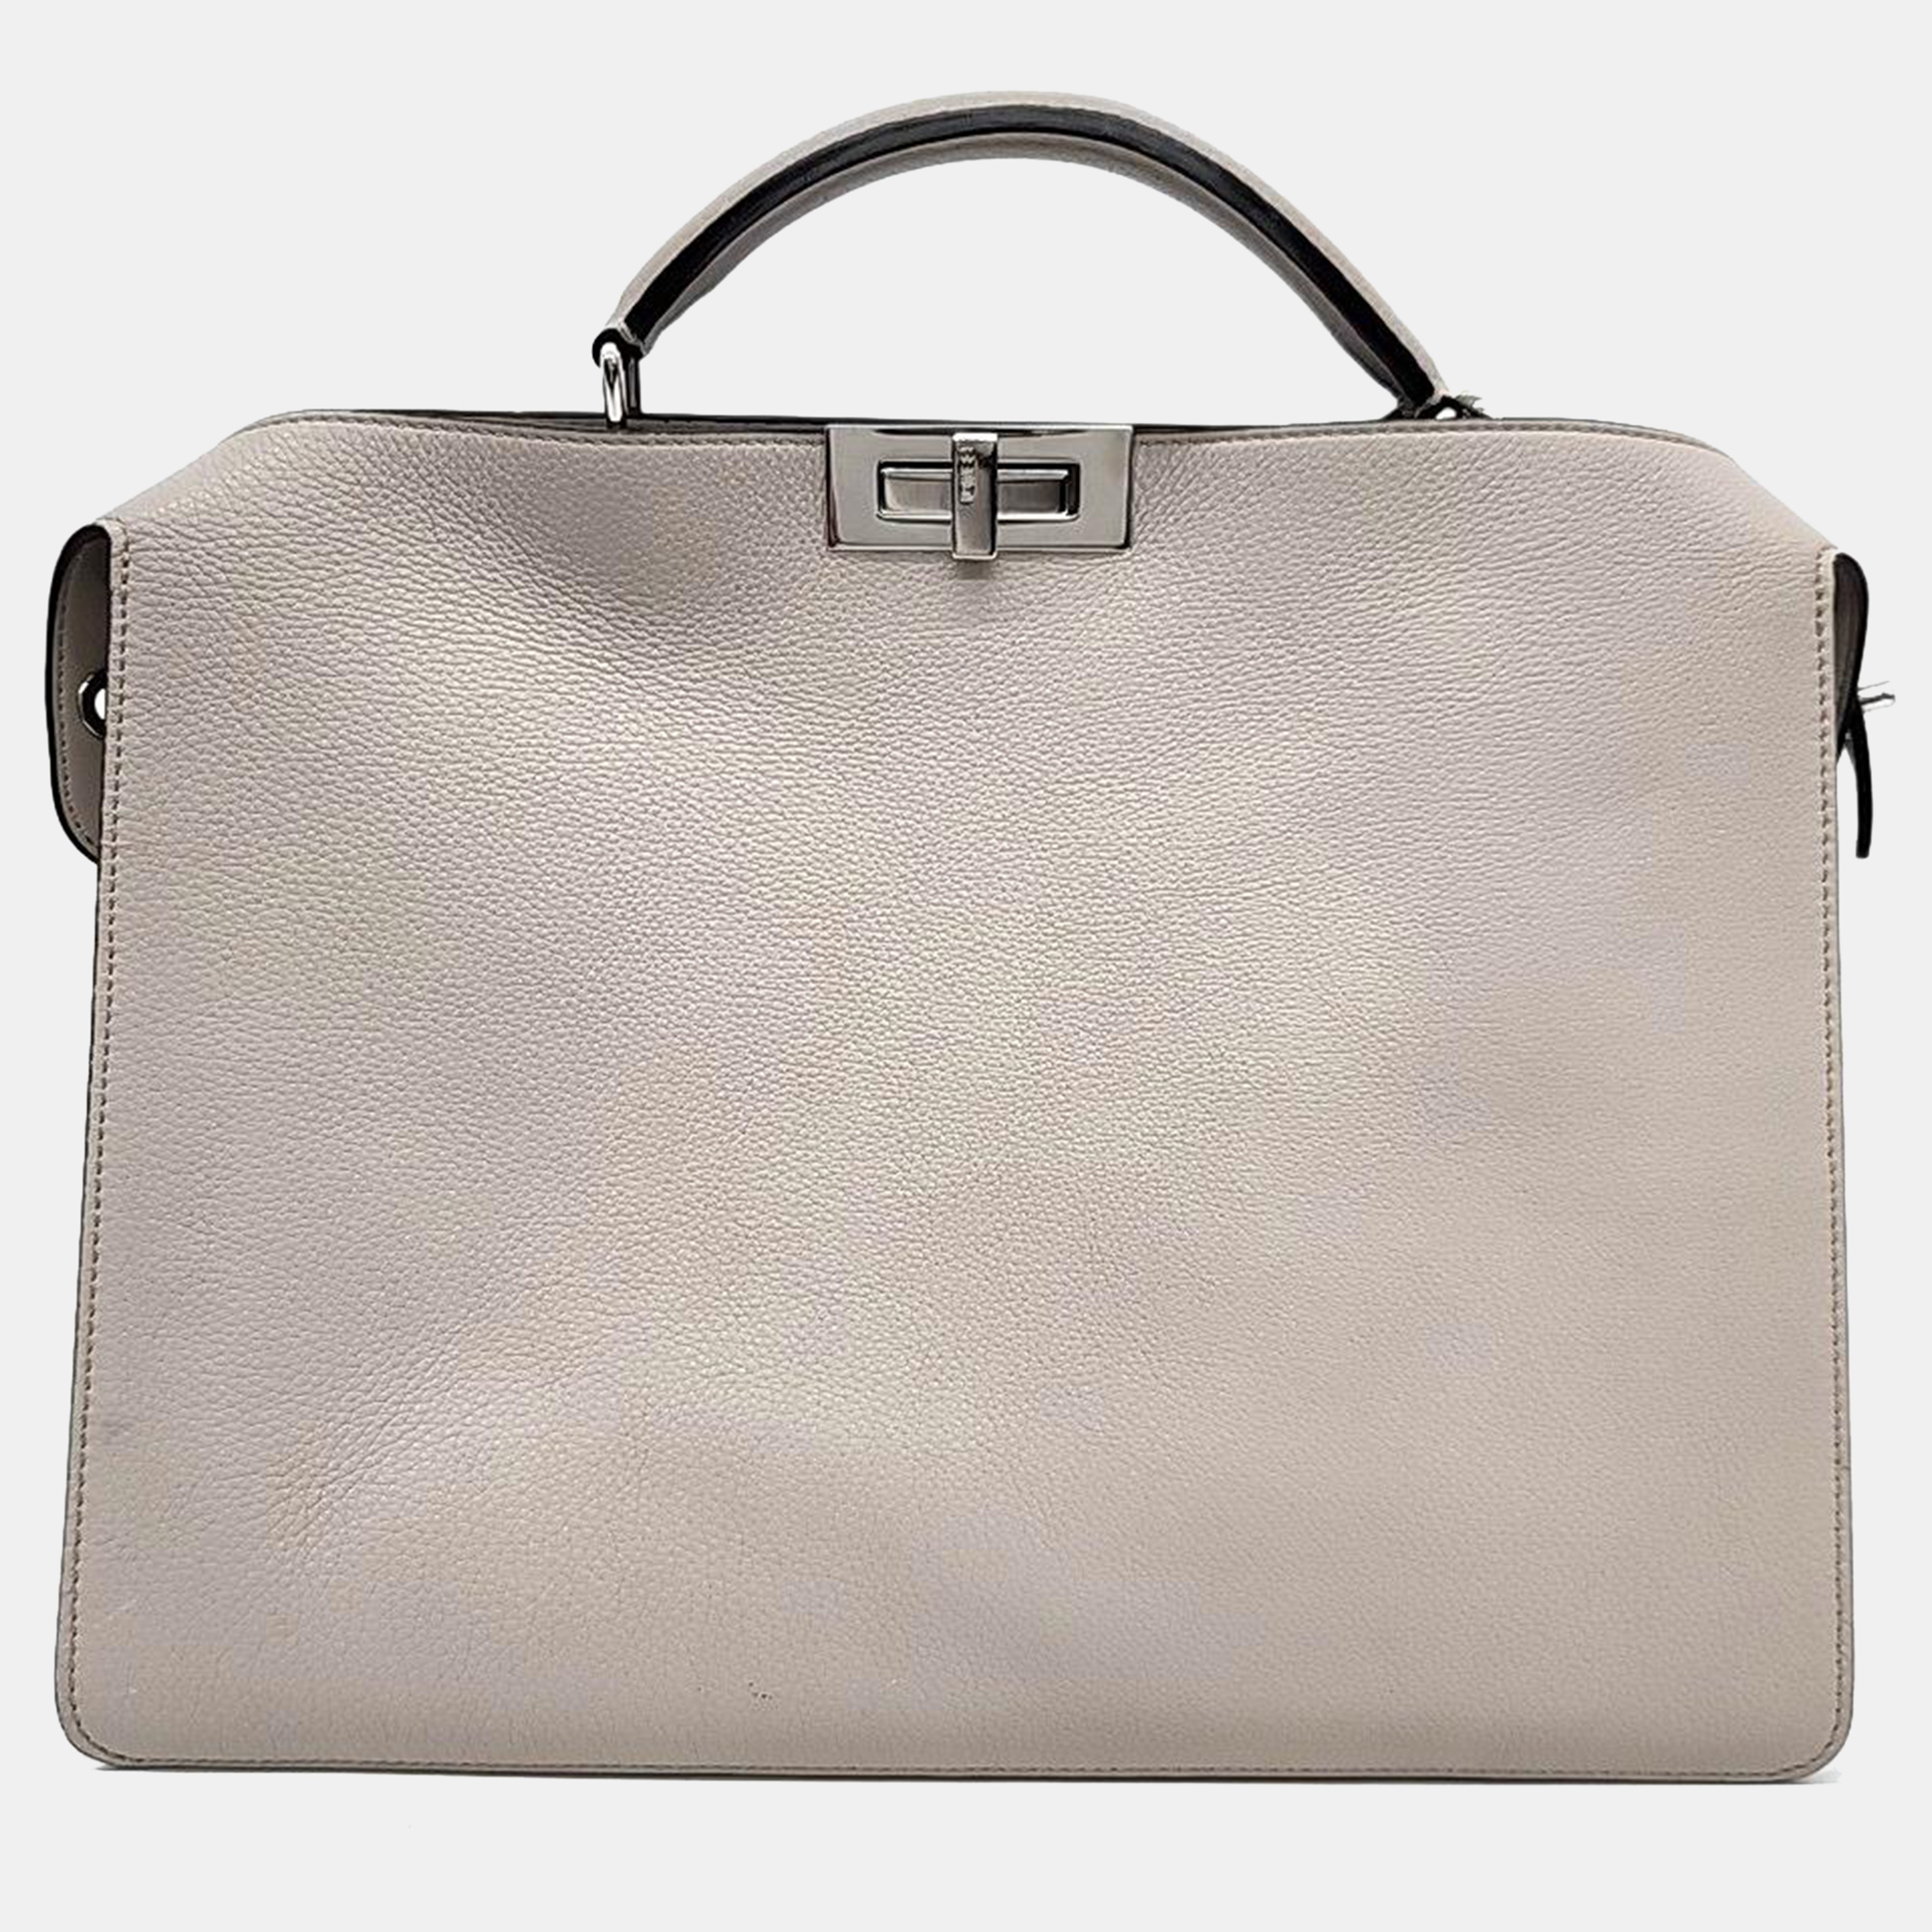 Fendi light gray leather medium peekaboo iseeu top handle bag